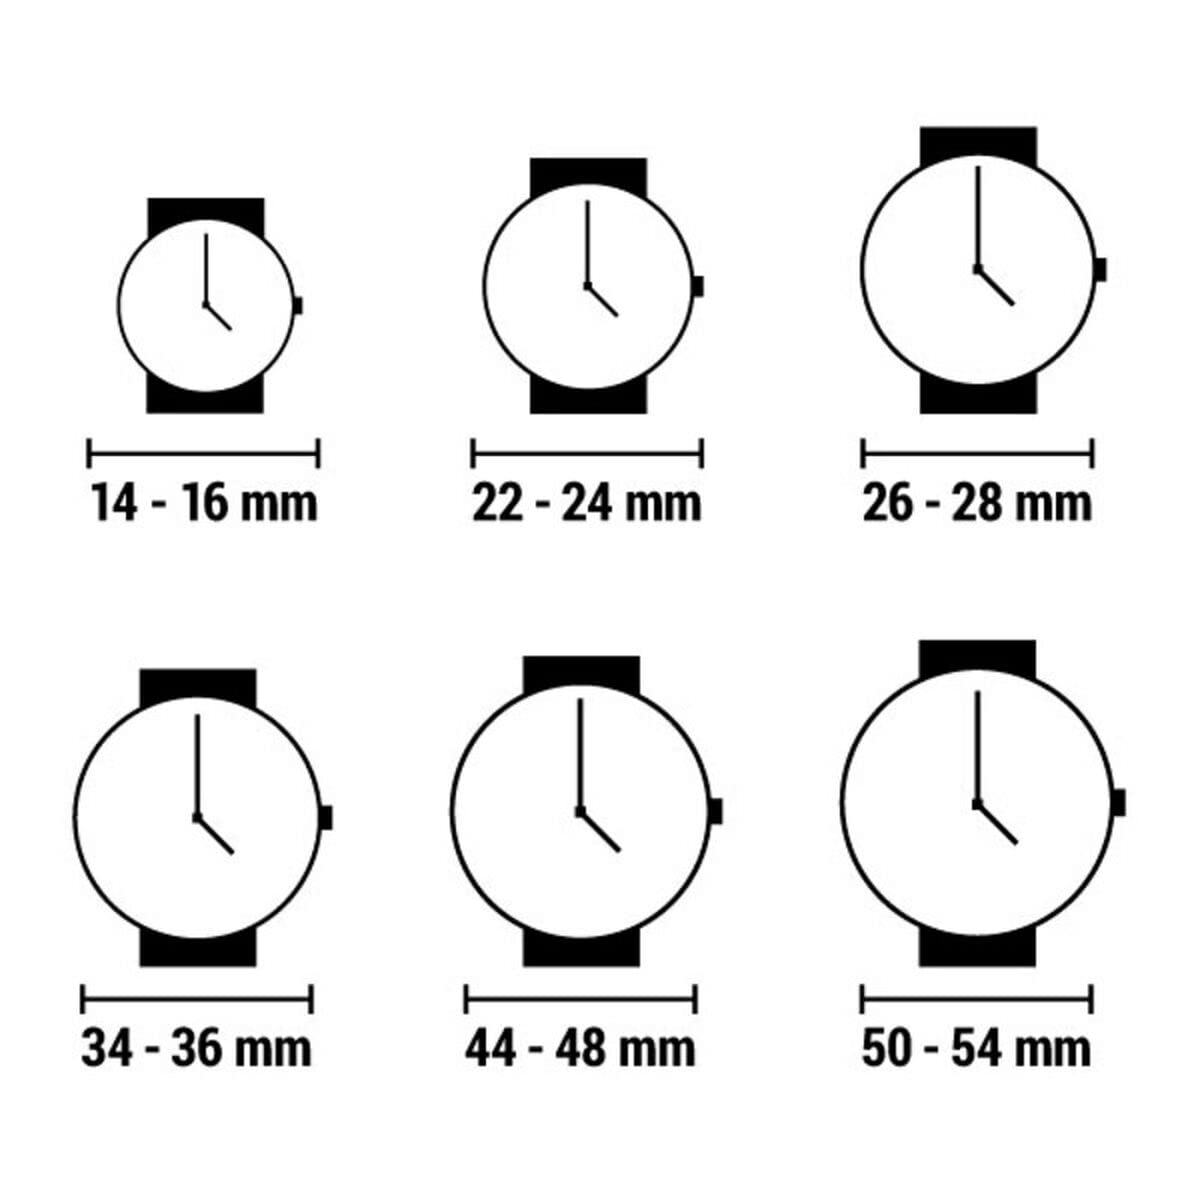 Timex Ironman Sleek 50 Lap Ladies Digital Watch TW5K97700